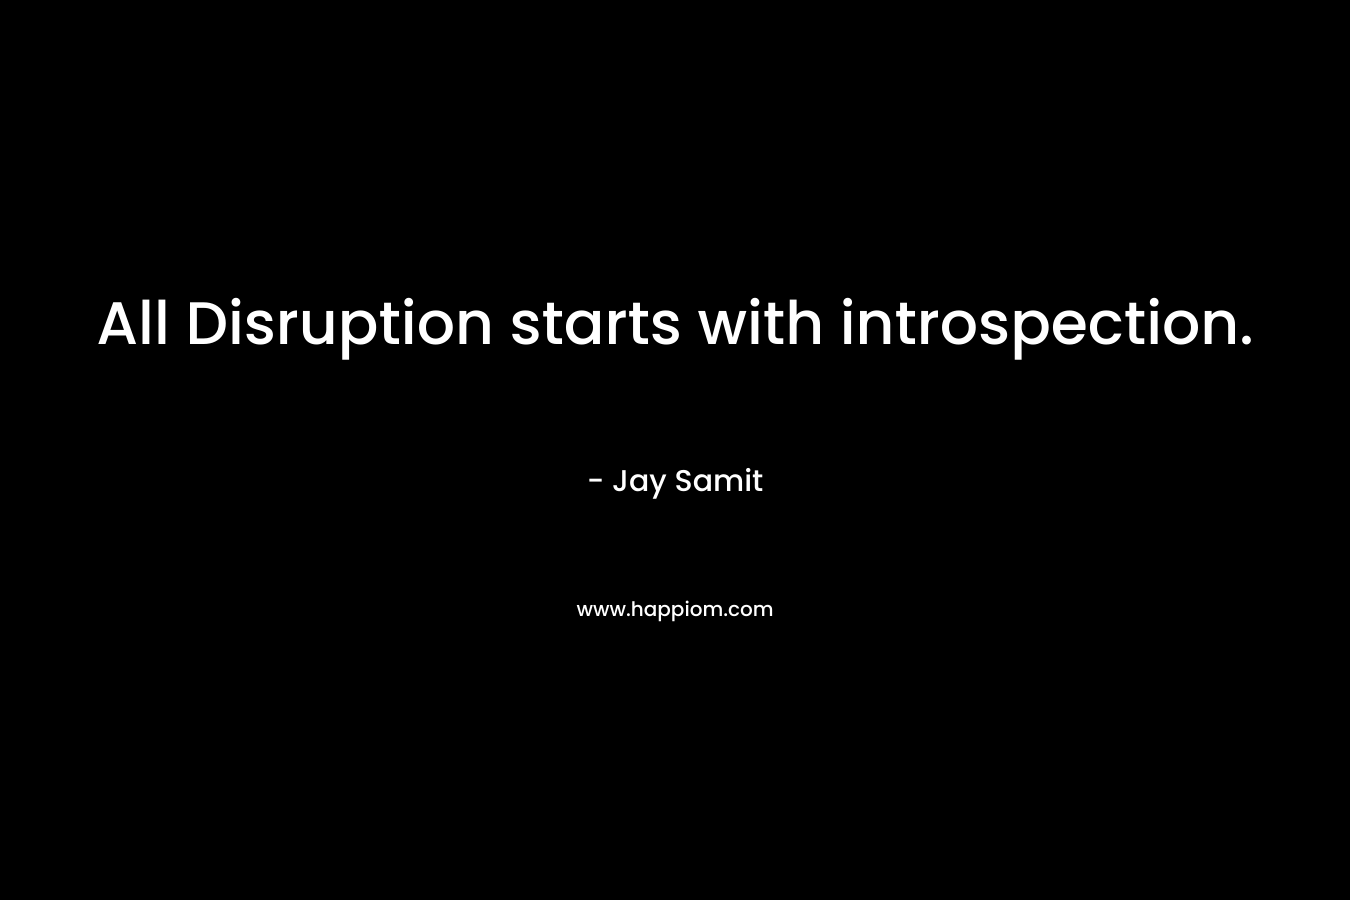 All Disruption starts with introspection. – Jay Samit